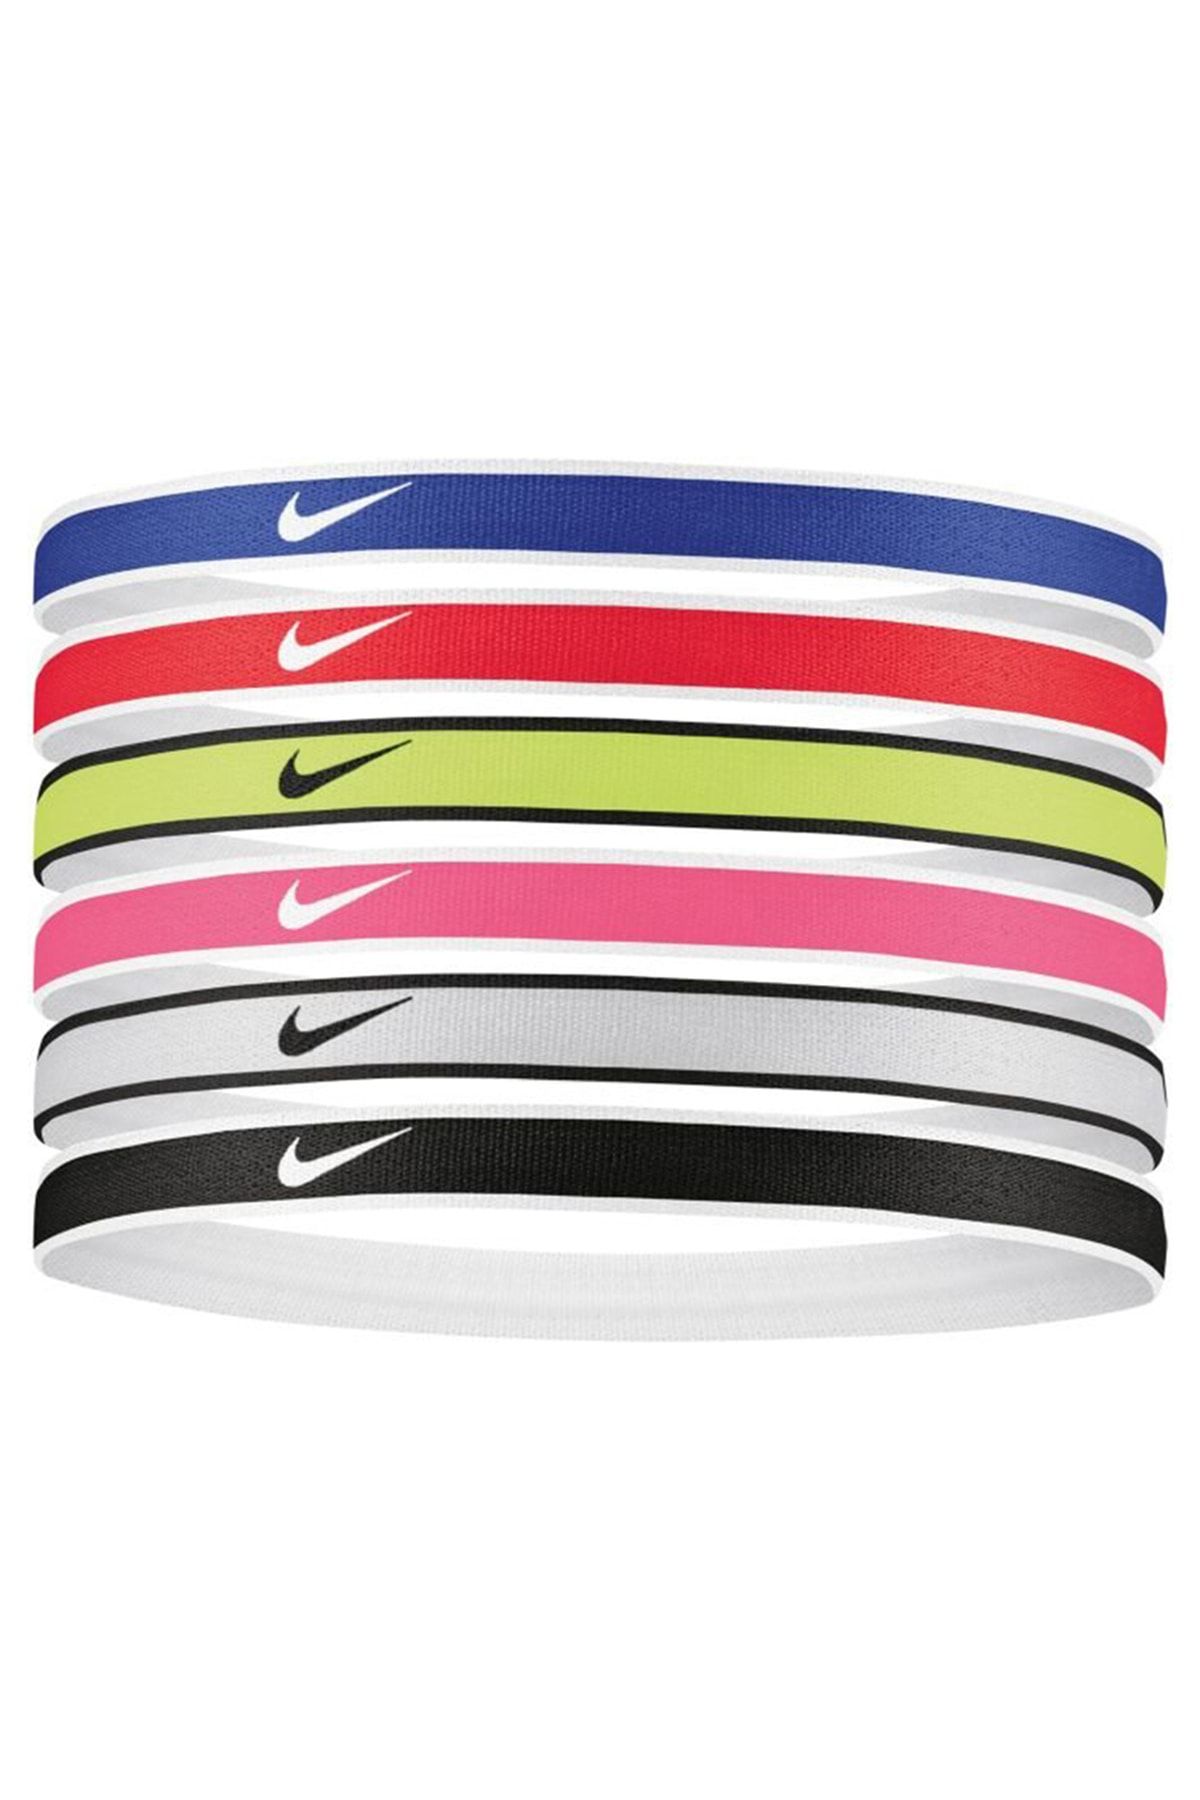 Nike Sport Saç Bandı 6 Lı Paket N1002021-655